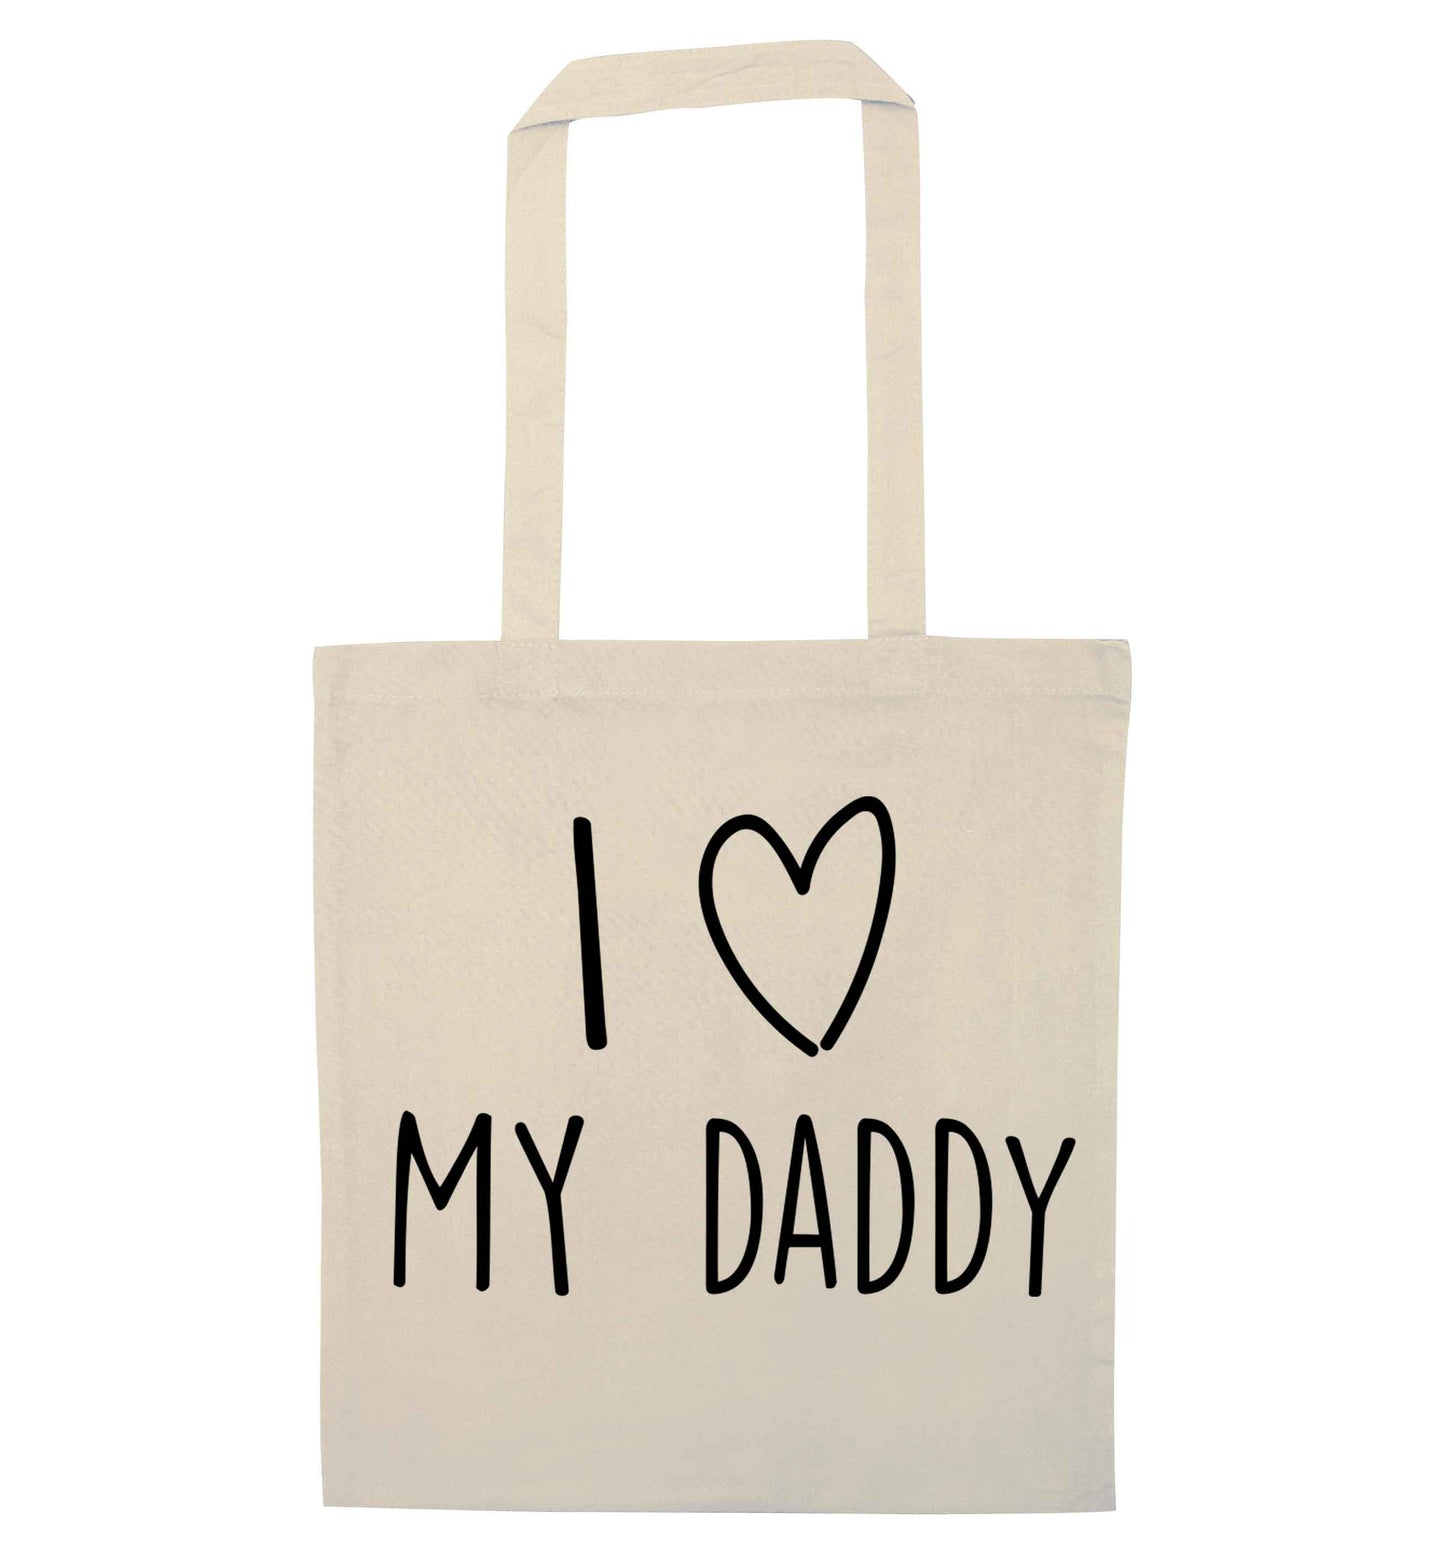 I love my daddy natural tote bag